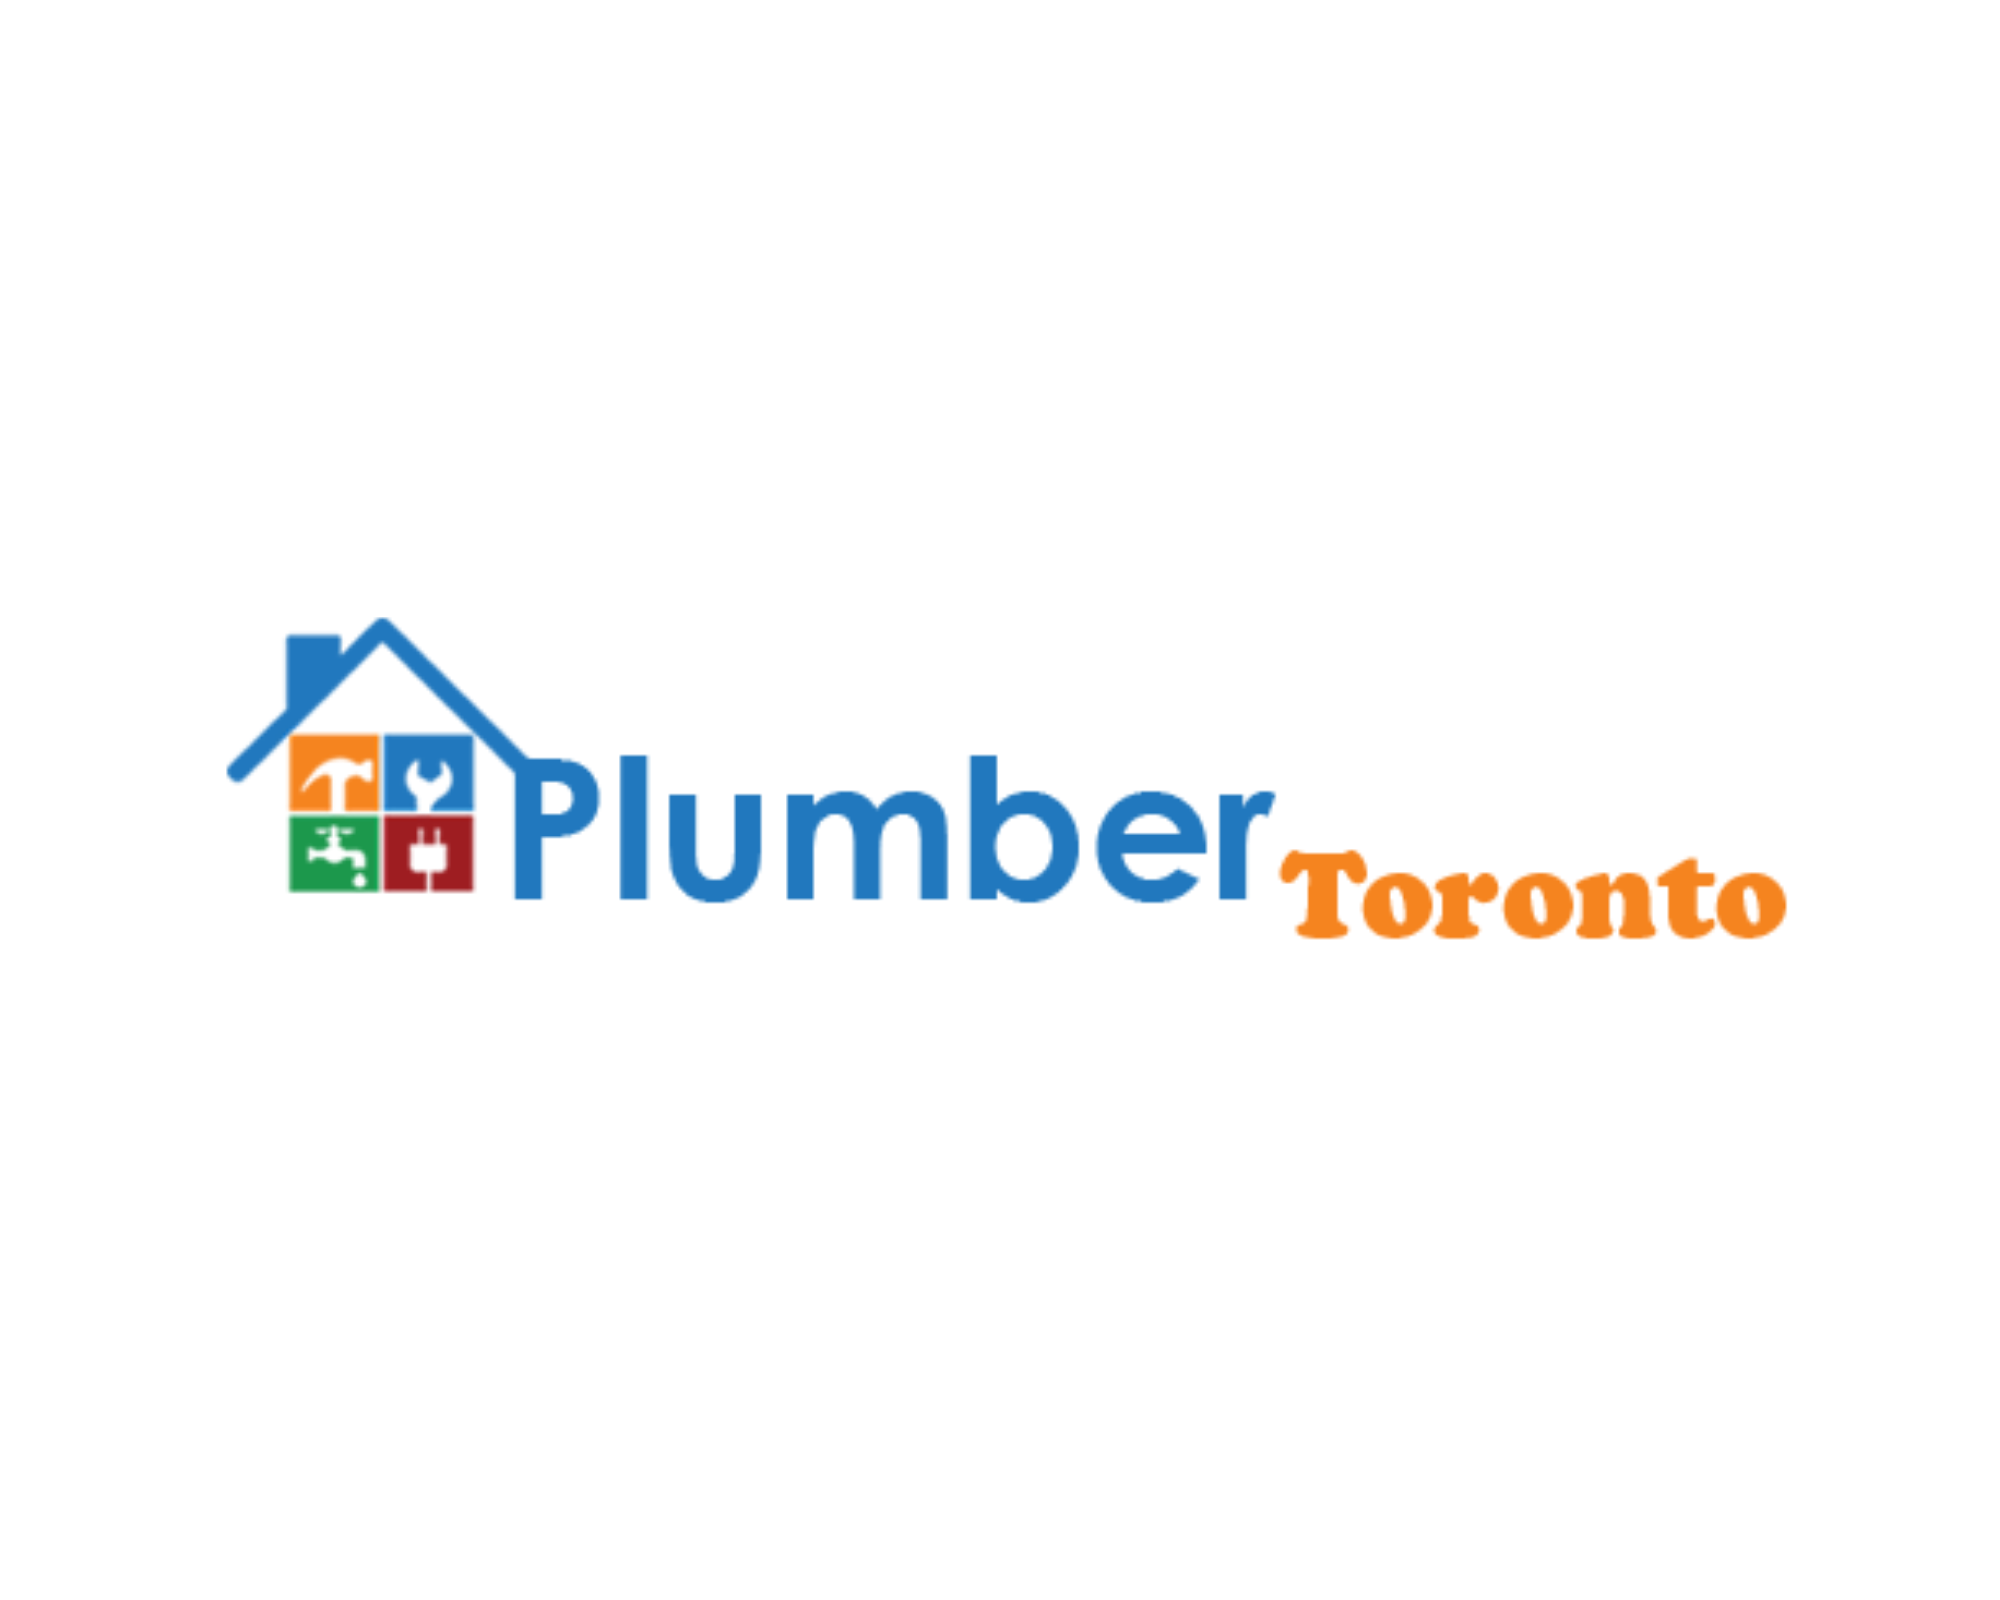 Toronto Plumbers Group